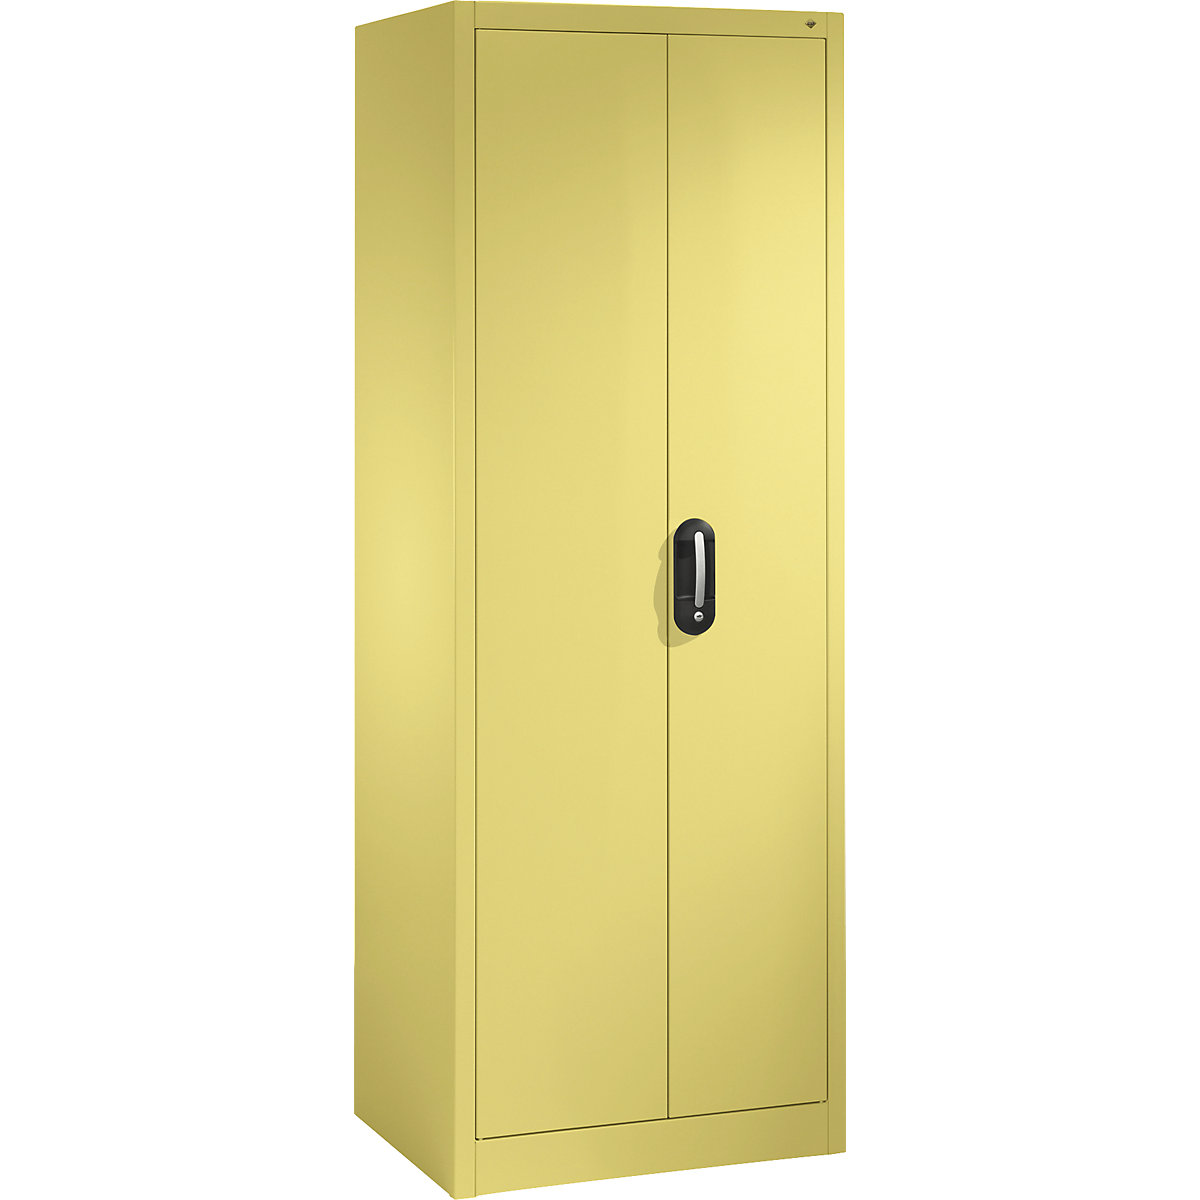 C+P – ACURADO universal cupboard, WxD 700 x 500 mm, sulphur yellow / sulphur yellow